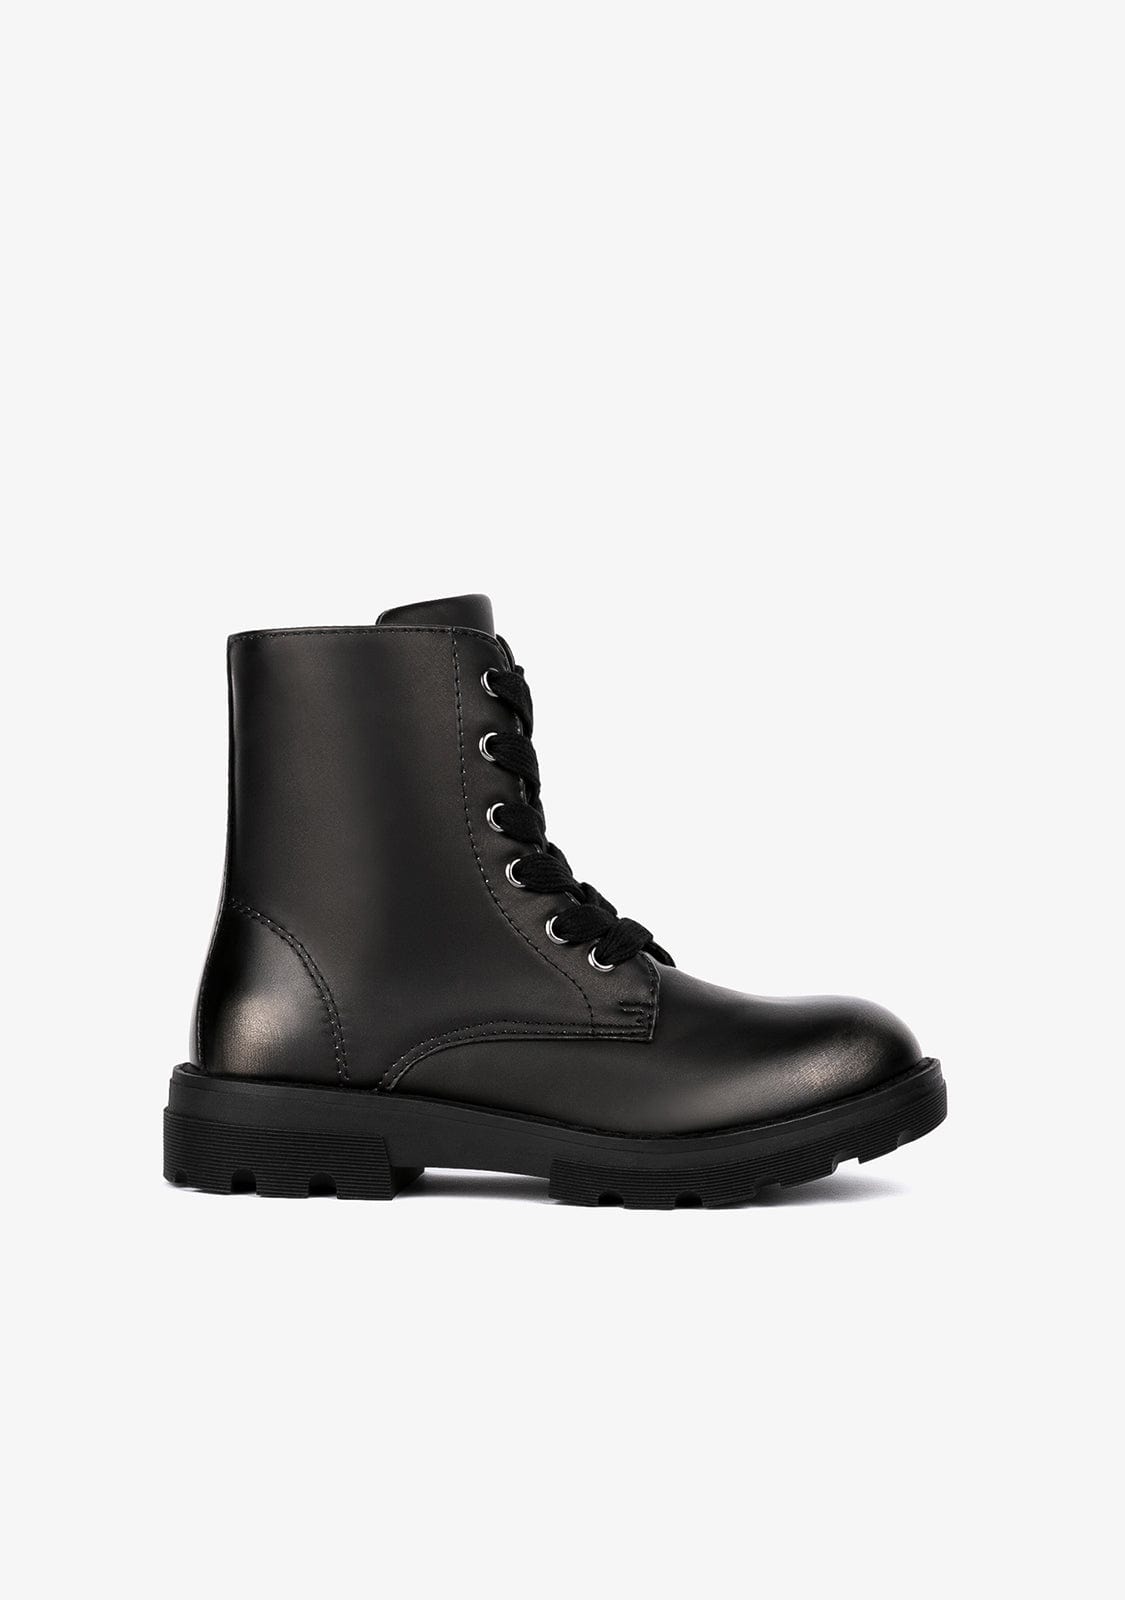 B&W JUNIOR Shoes Black / Lead Metallized Combat Boots Antik